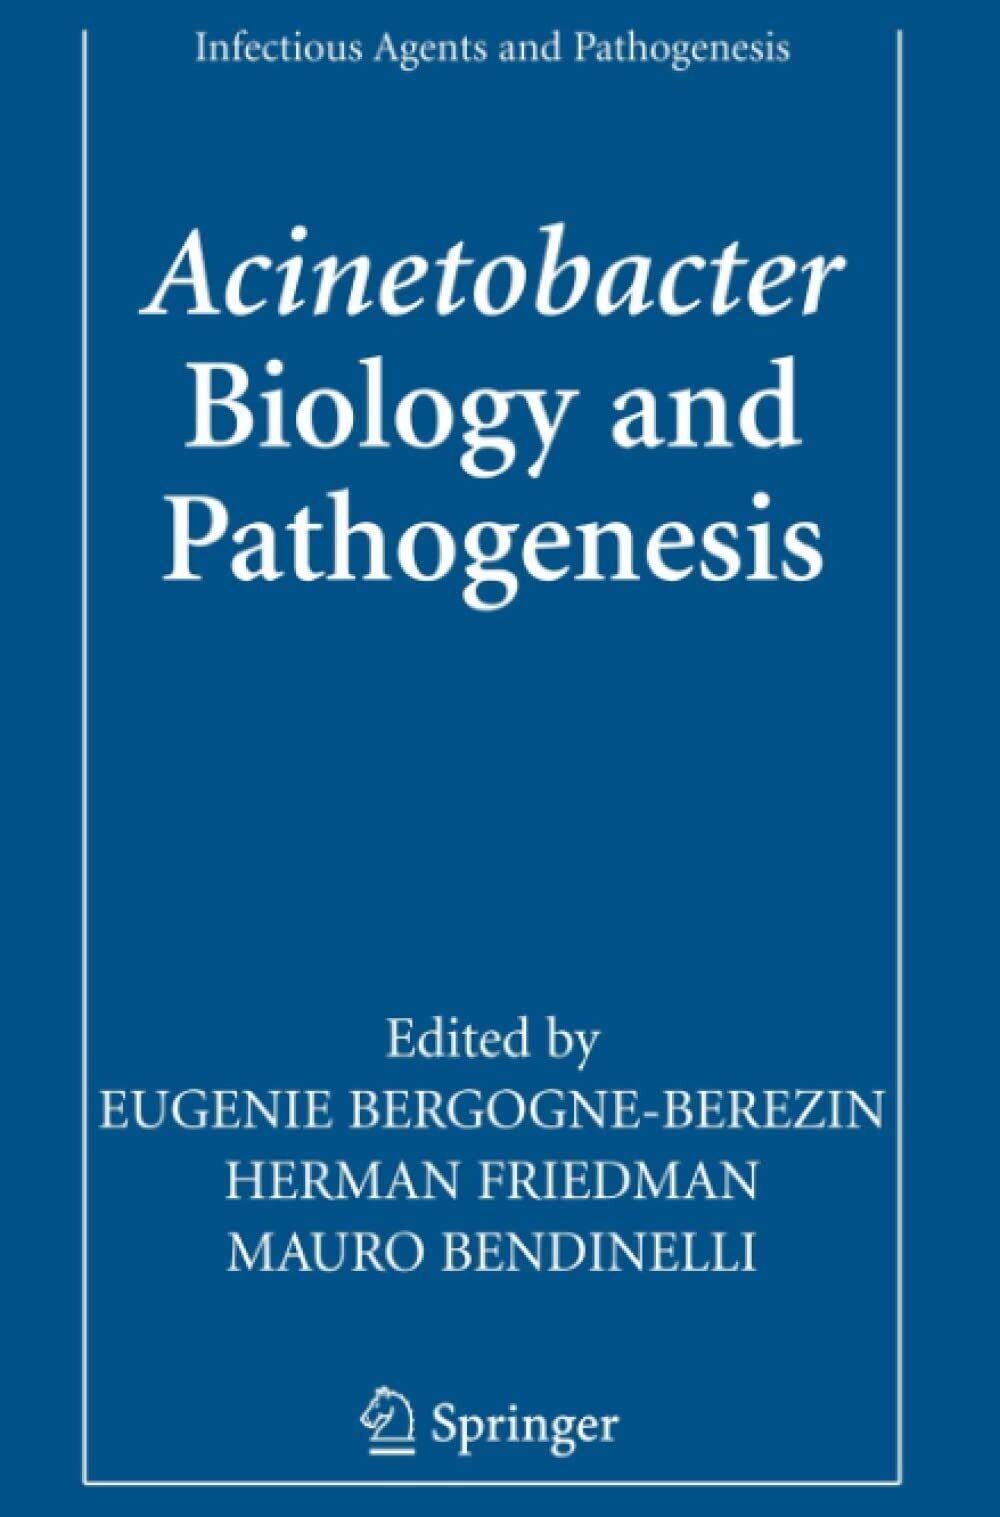 Acinetobacter: Biology and Pathogenesis - Eug?nie Bergogne-B?r?zin - 2010